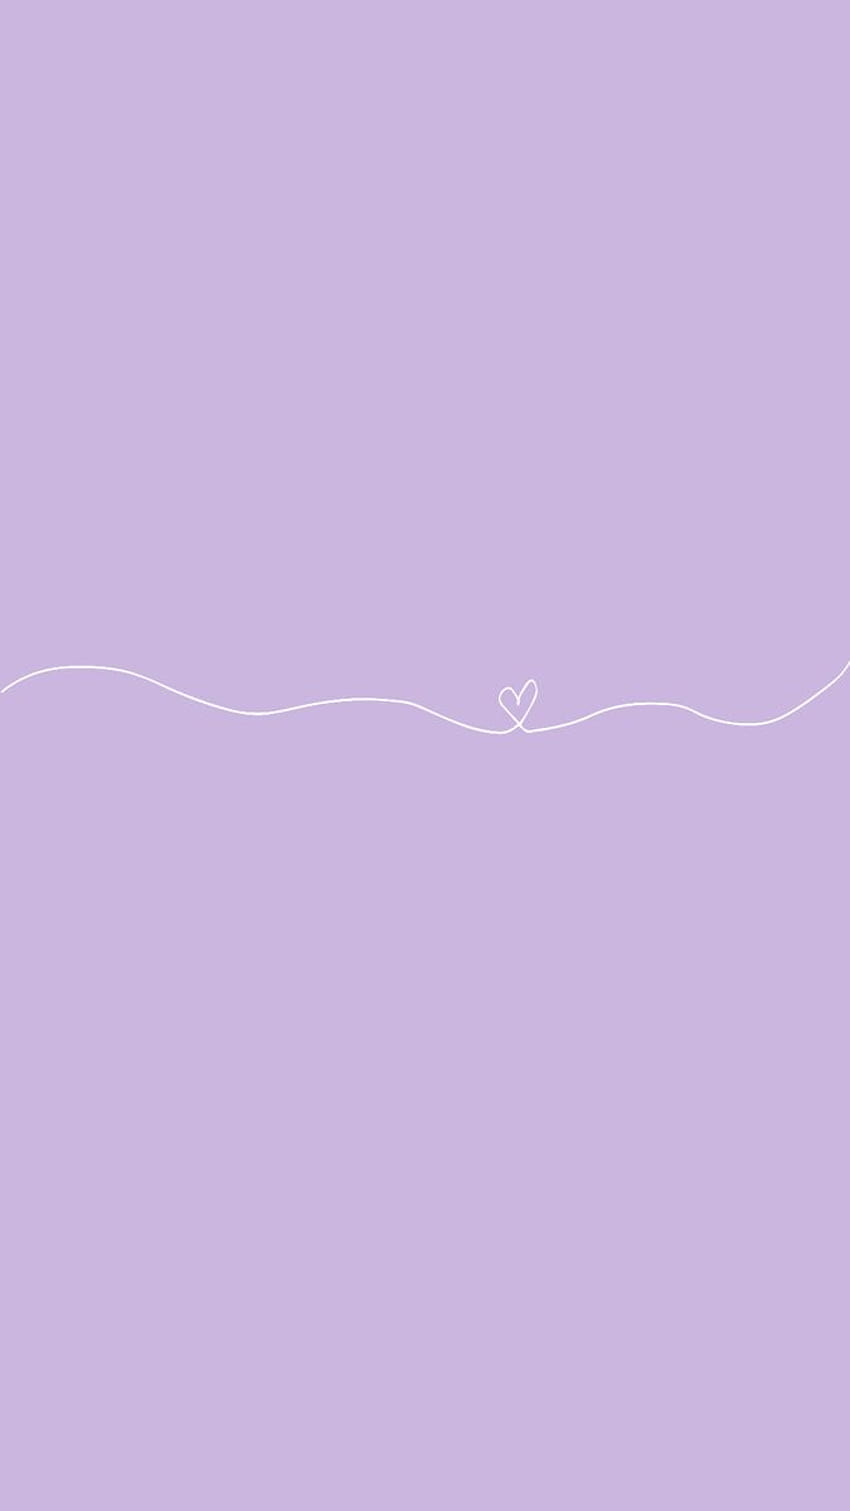 A line of hearts on purple background - Cute purple